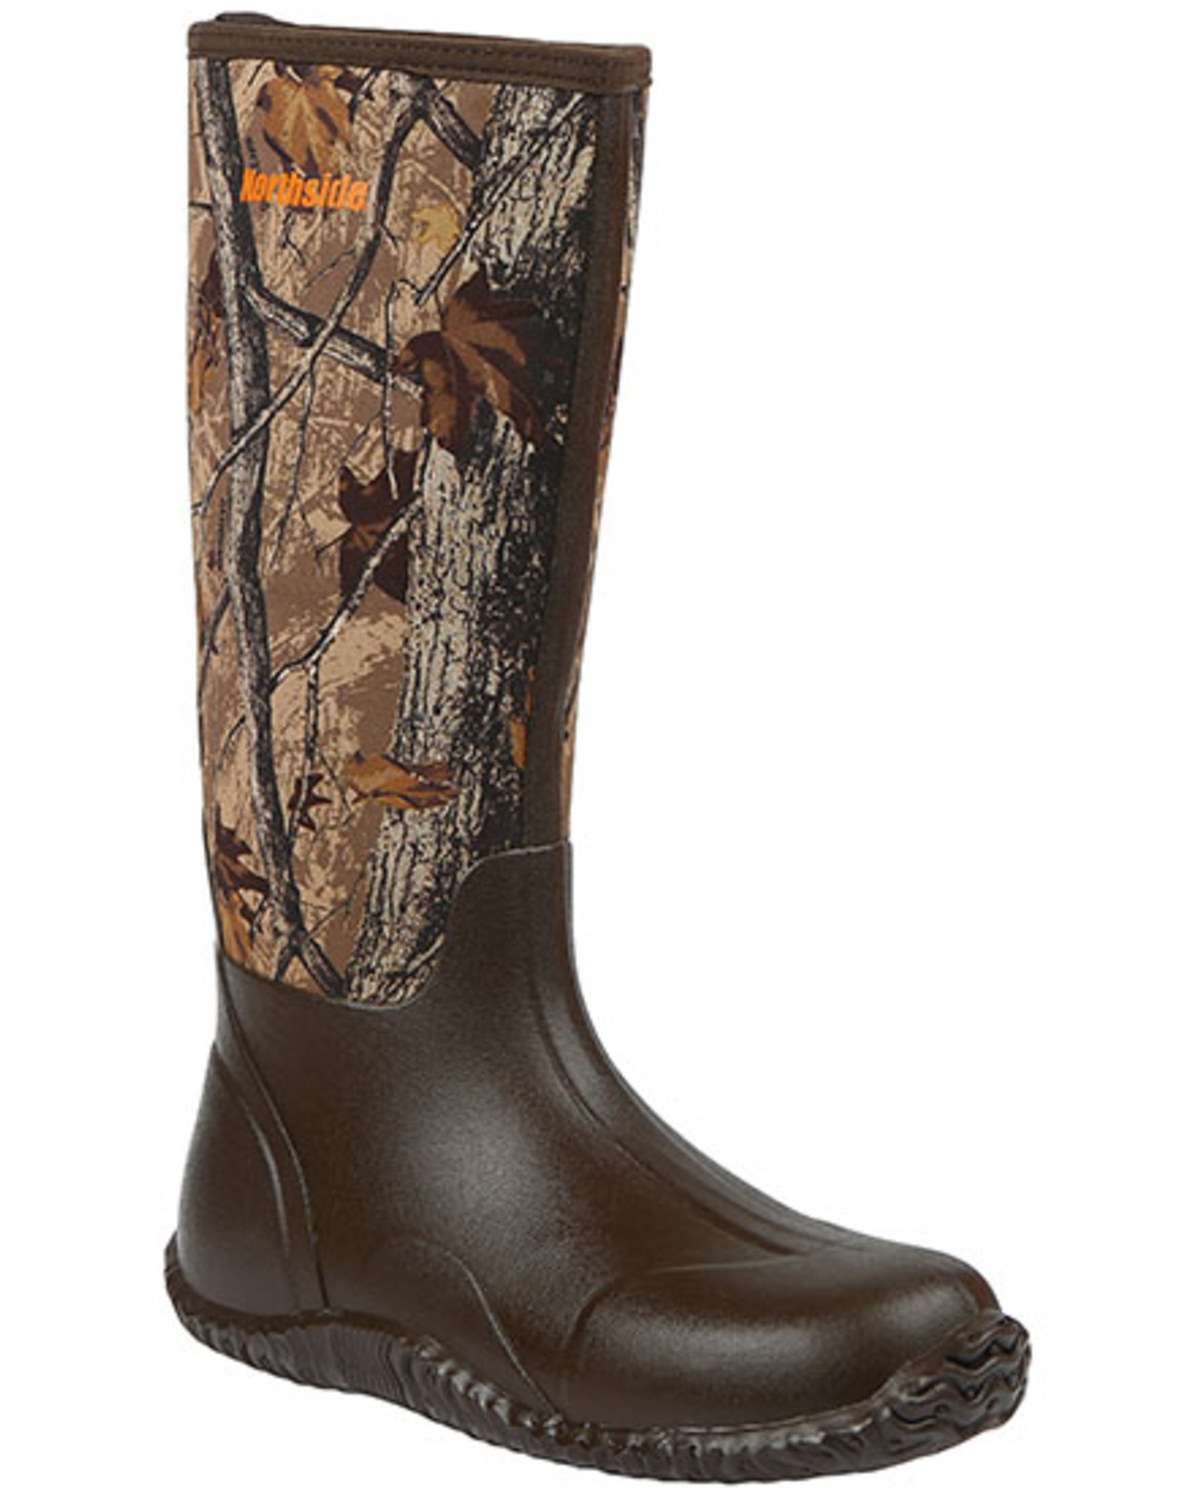 Northside Men's Shoshone Falls Waterproof Rubber Boots - Soft Toe